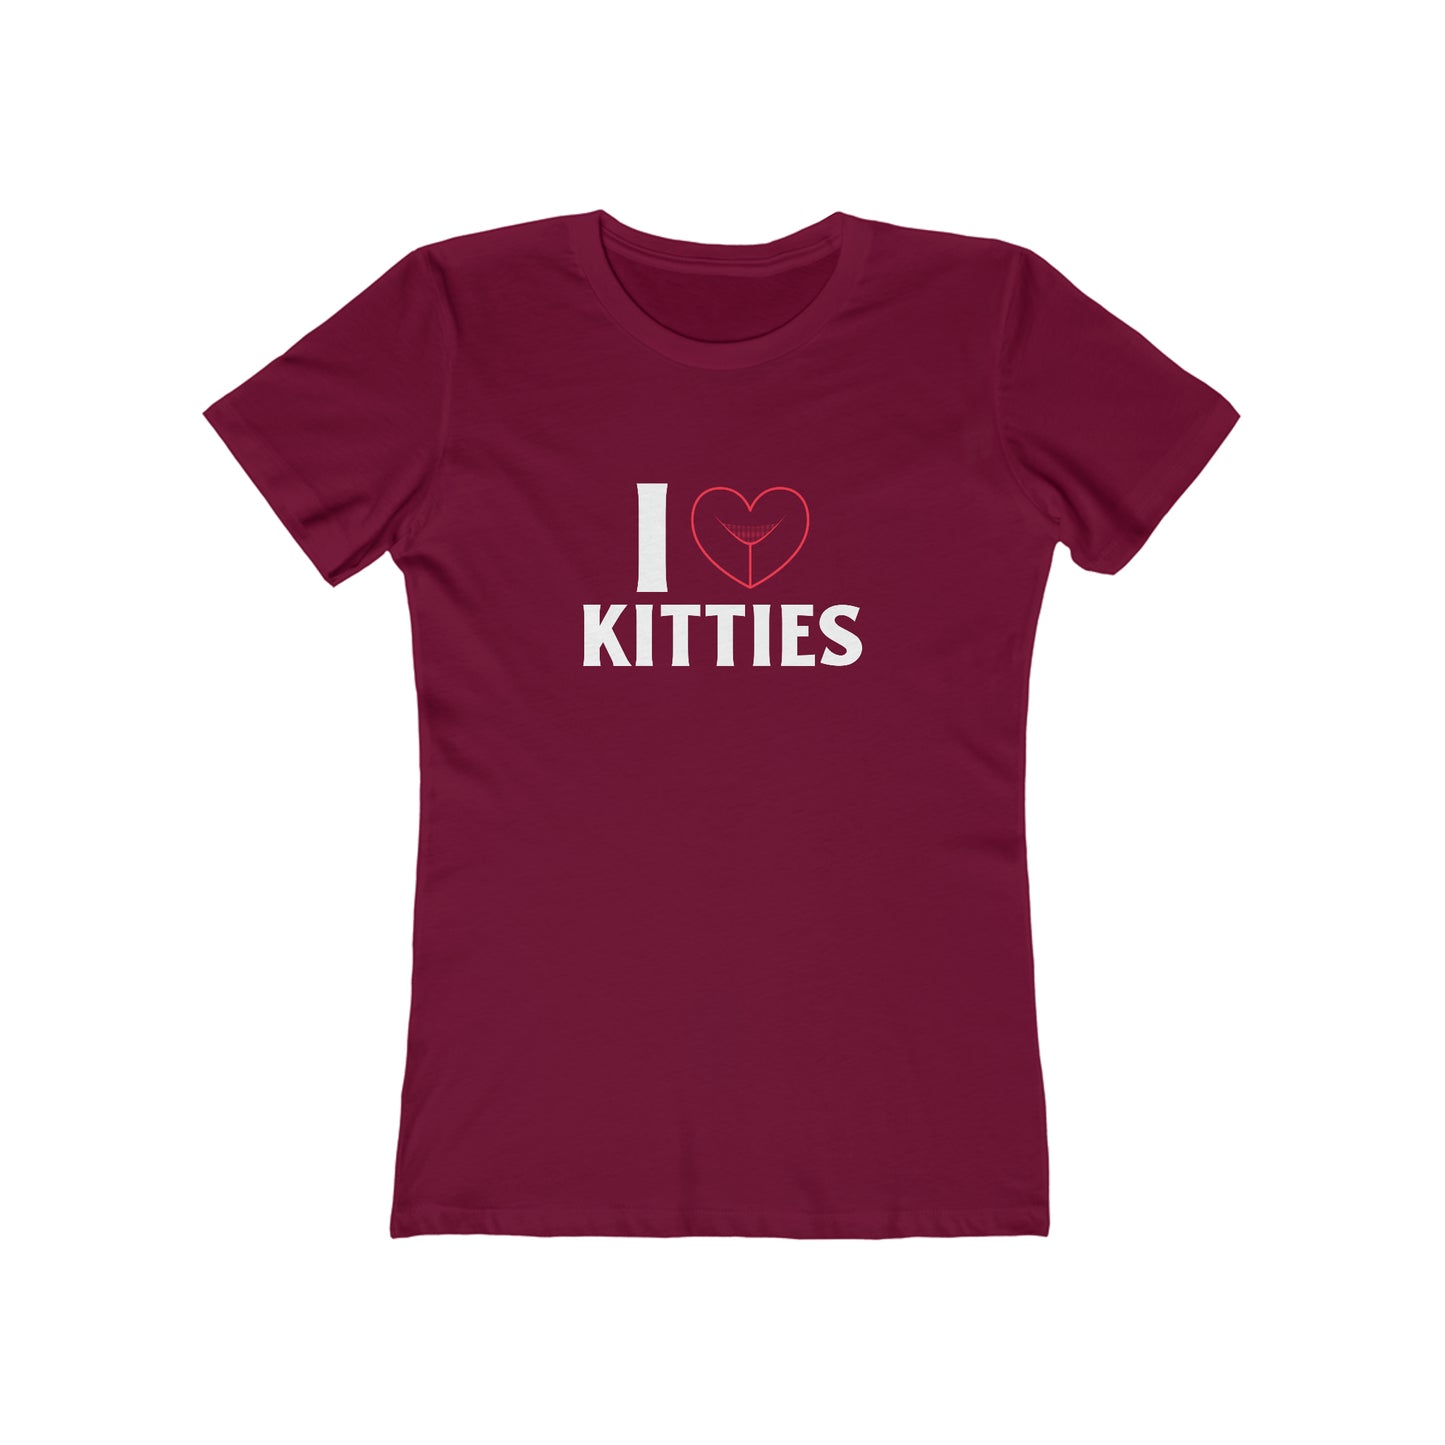 I Heart Kitties - Women's T-shirt